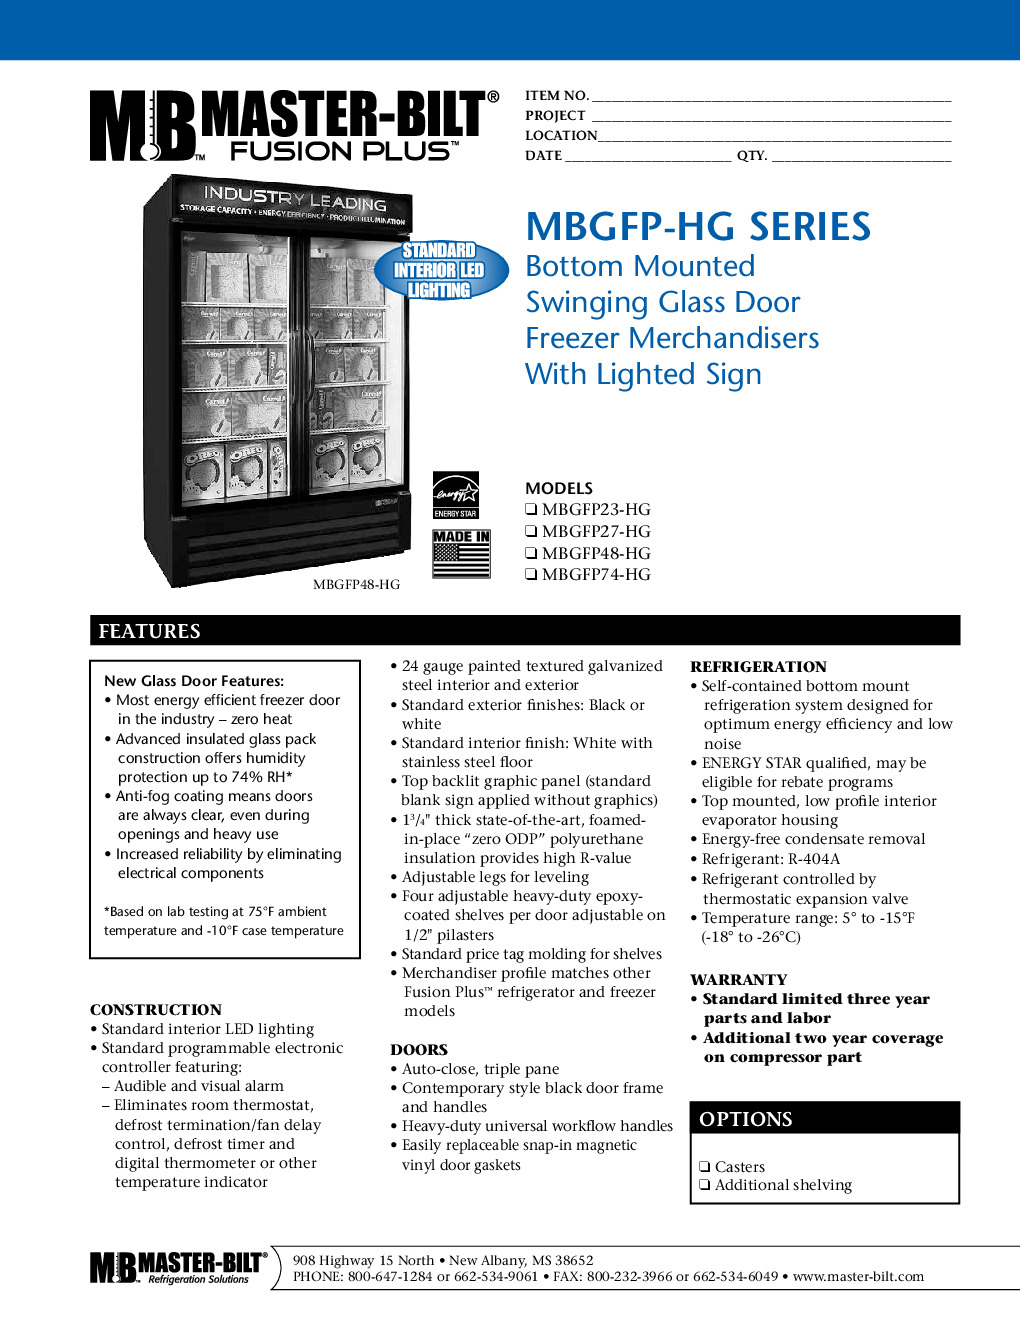 Master-Bilt MBGFP23-HG Merchandiser Freezer